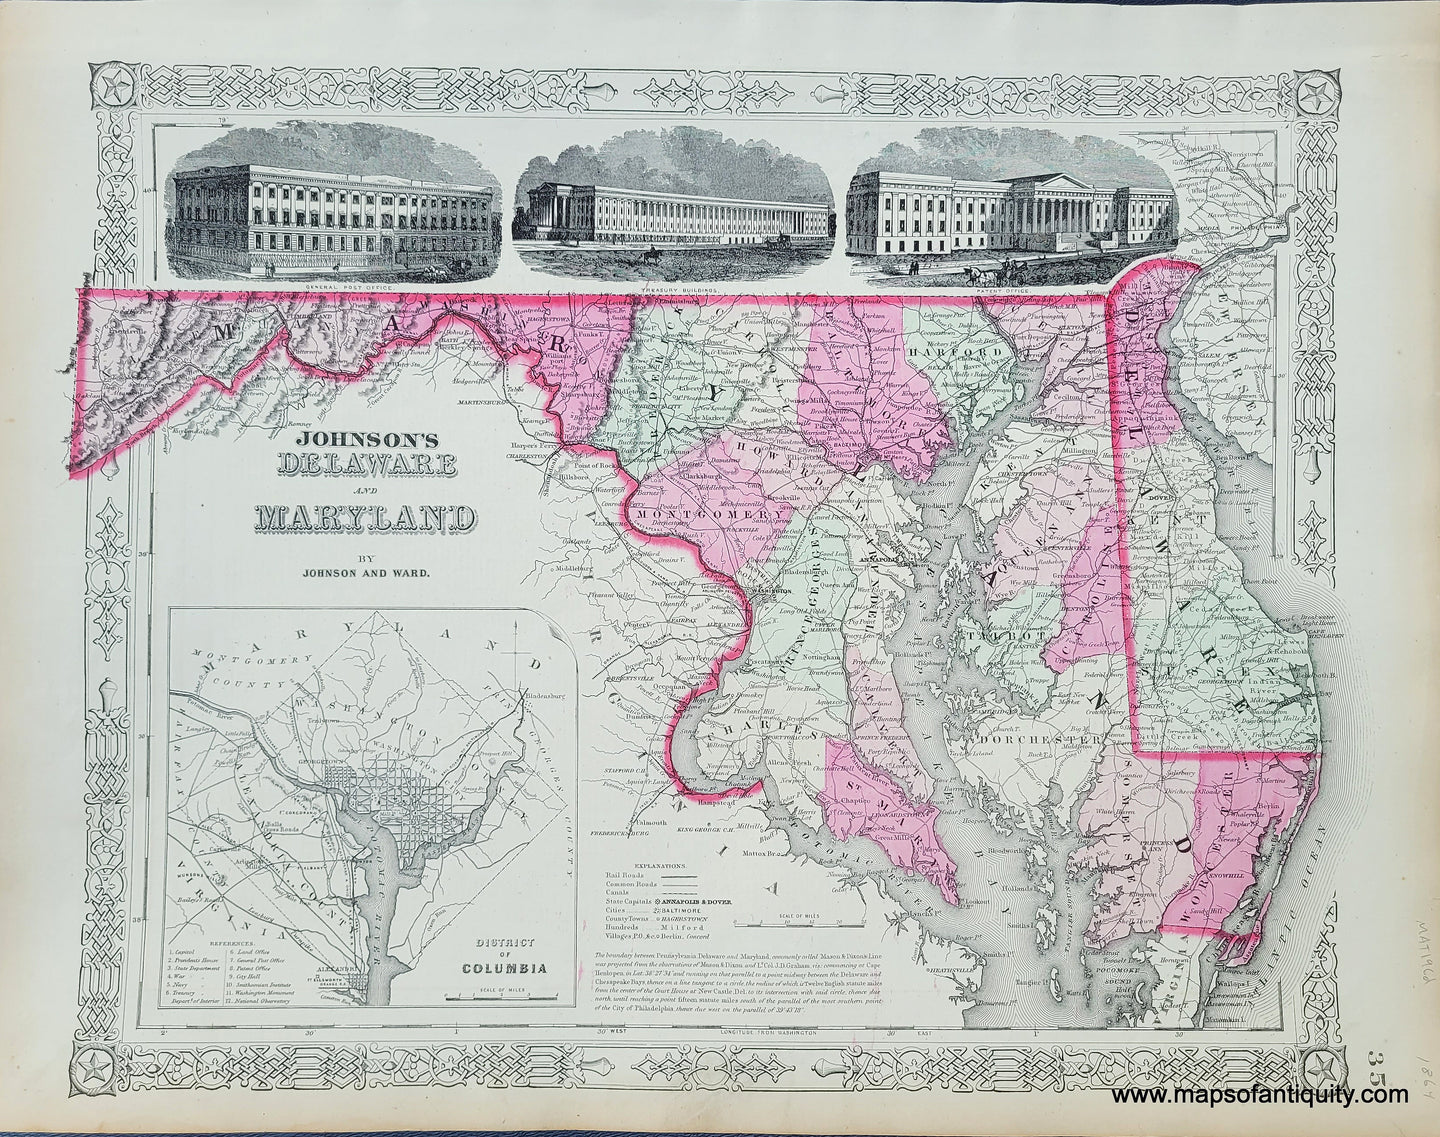 Maps-Antiquity-Antique-Map-Midatlantic-United-States-Johnson's-Delaware-and-Maryland-Johnson-Ward-1864-1860s-1800s-19th-Century